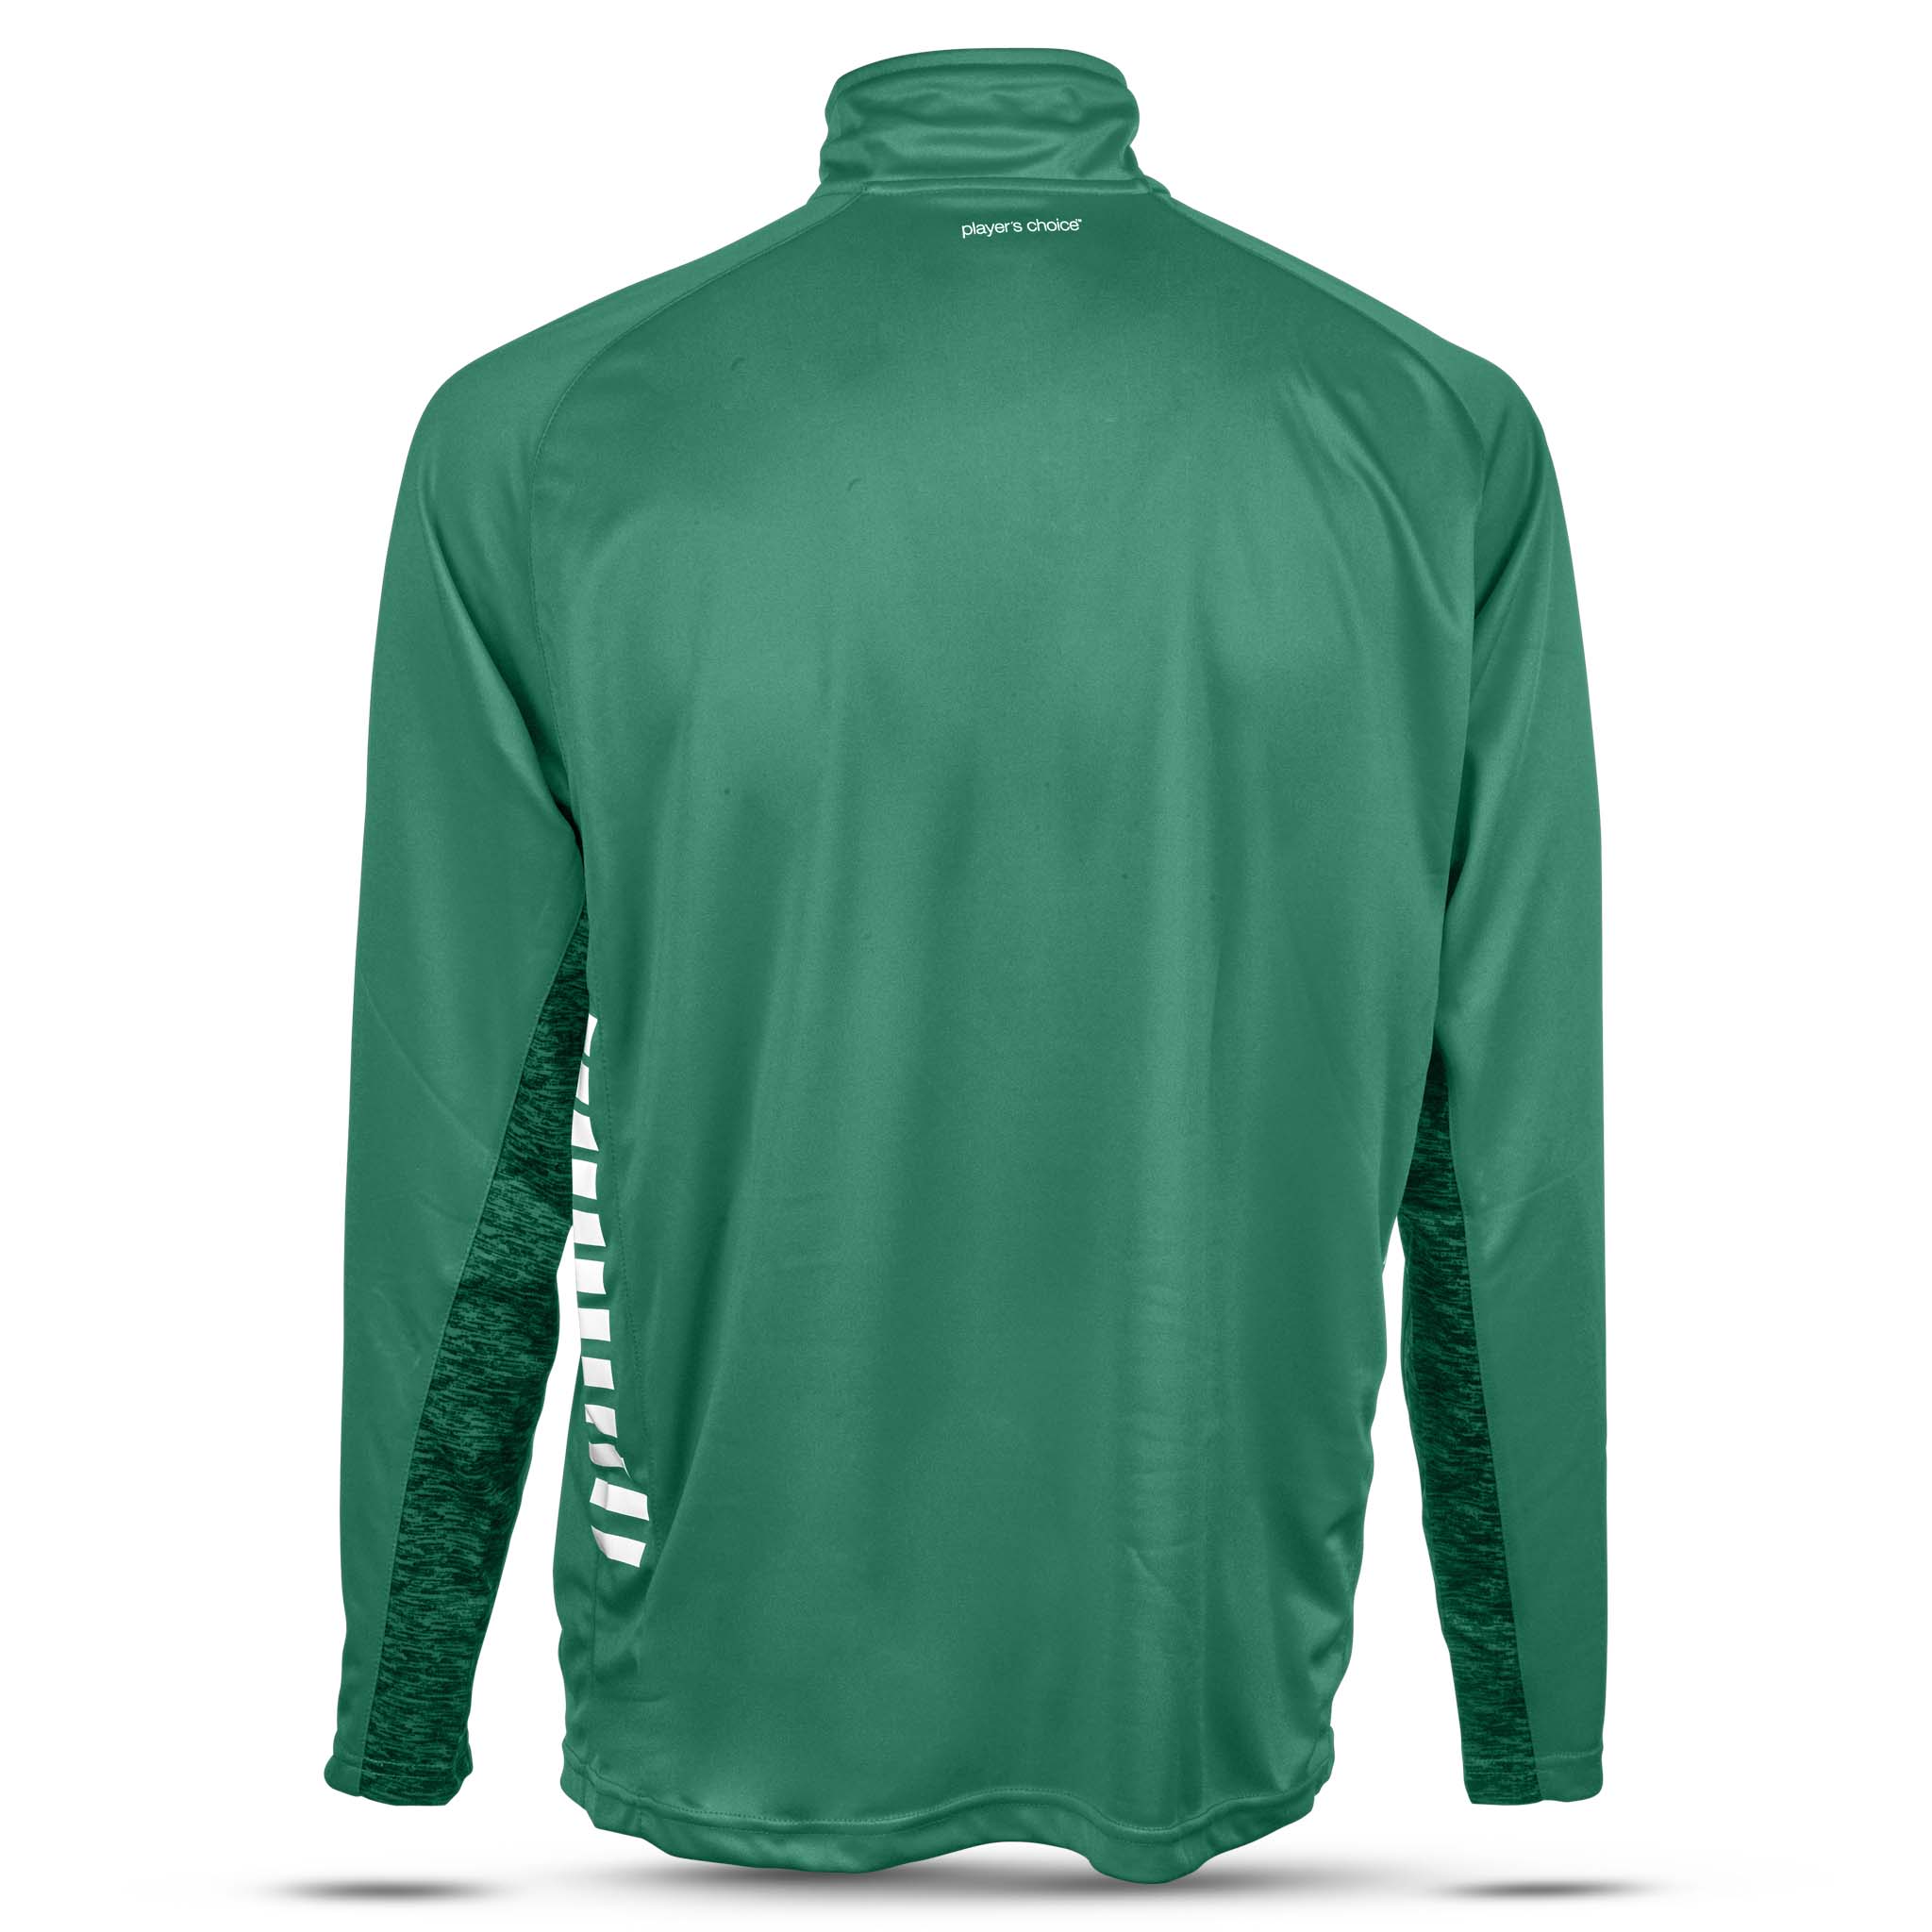 Spain Träning sweatshirt 1/2 zip - Barn #färg_grön